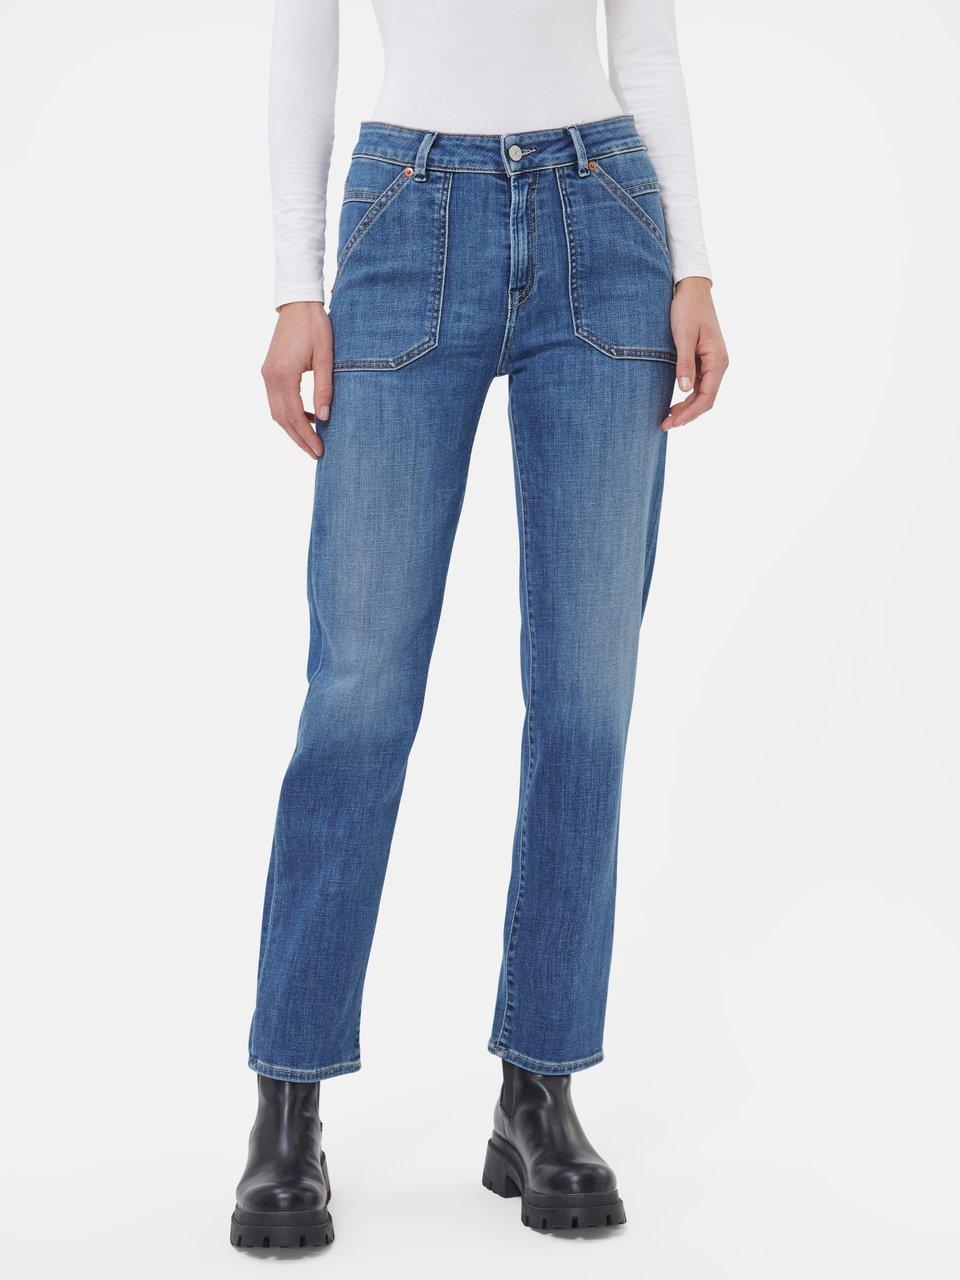 Denham - Jeans 'Bardot WW' in inchlengte 30